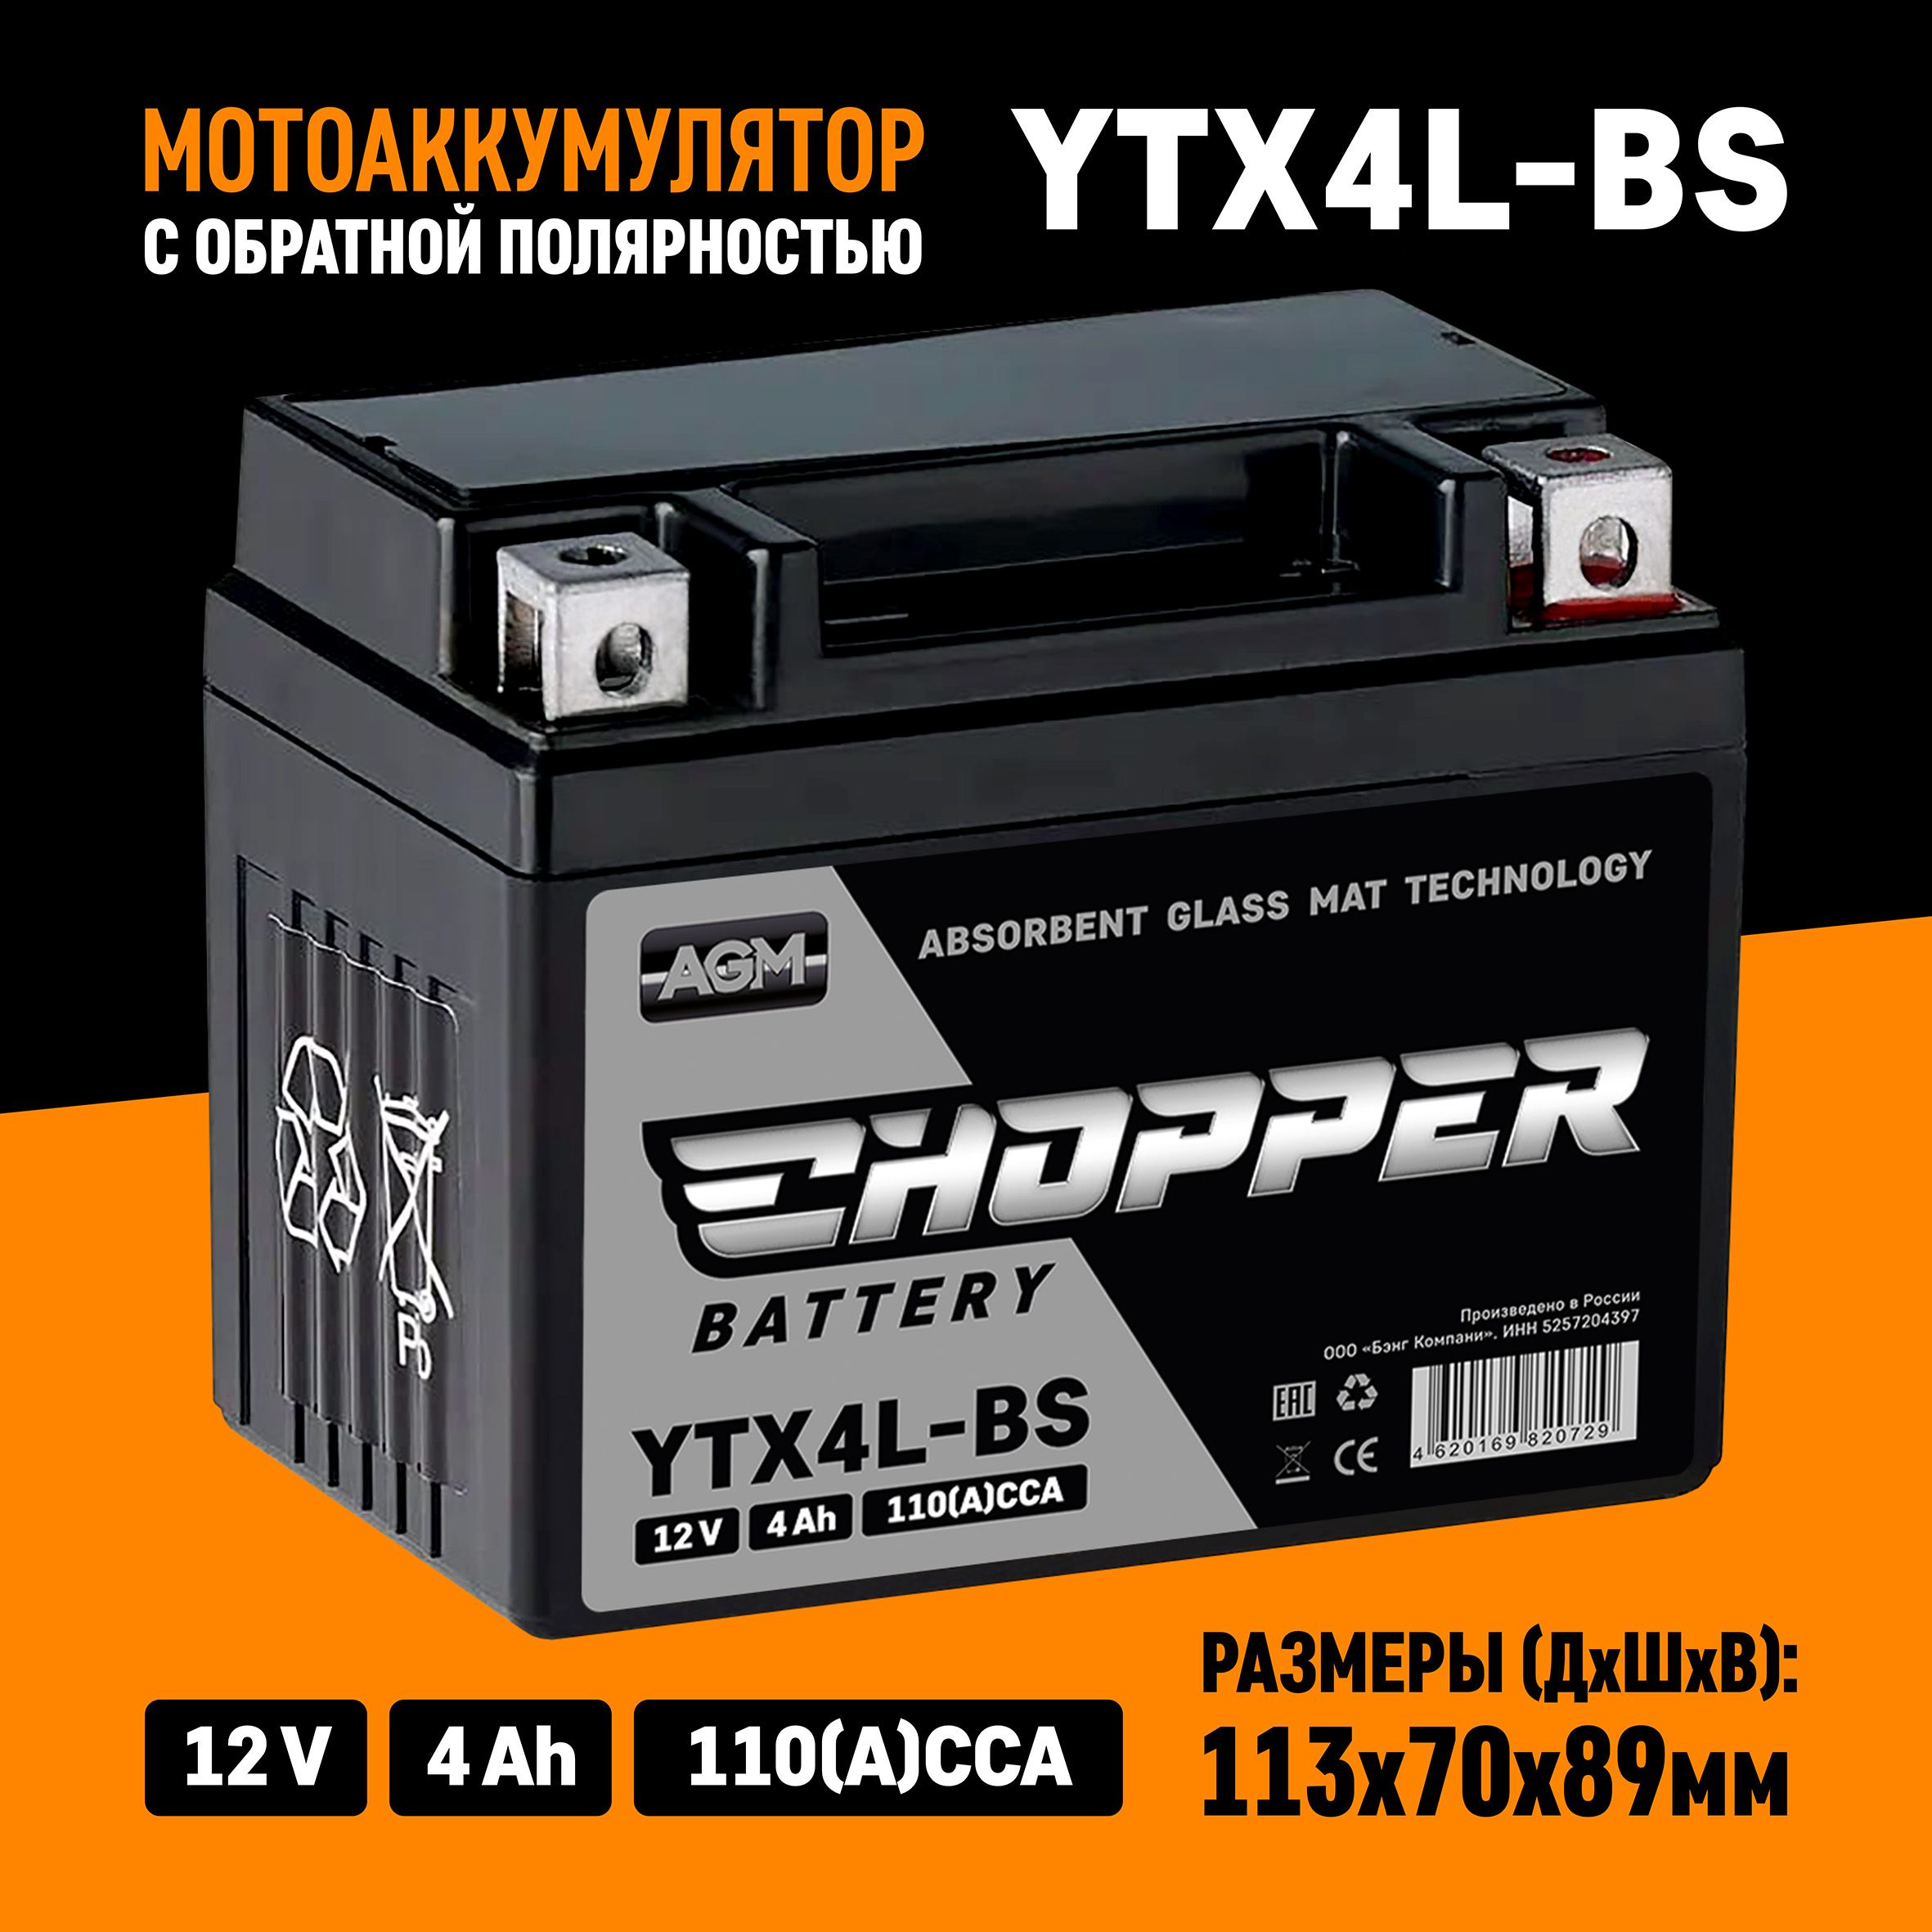 МотоАккумуляторCHOPPERAGM12В4Ач(CT1204,YTX4L-BS)обратнаяполярность,длямопедаАльфа,скутера,мотоцикла,ИБП